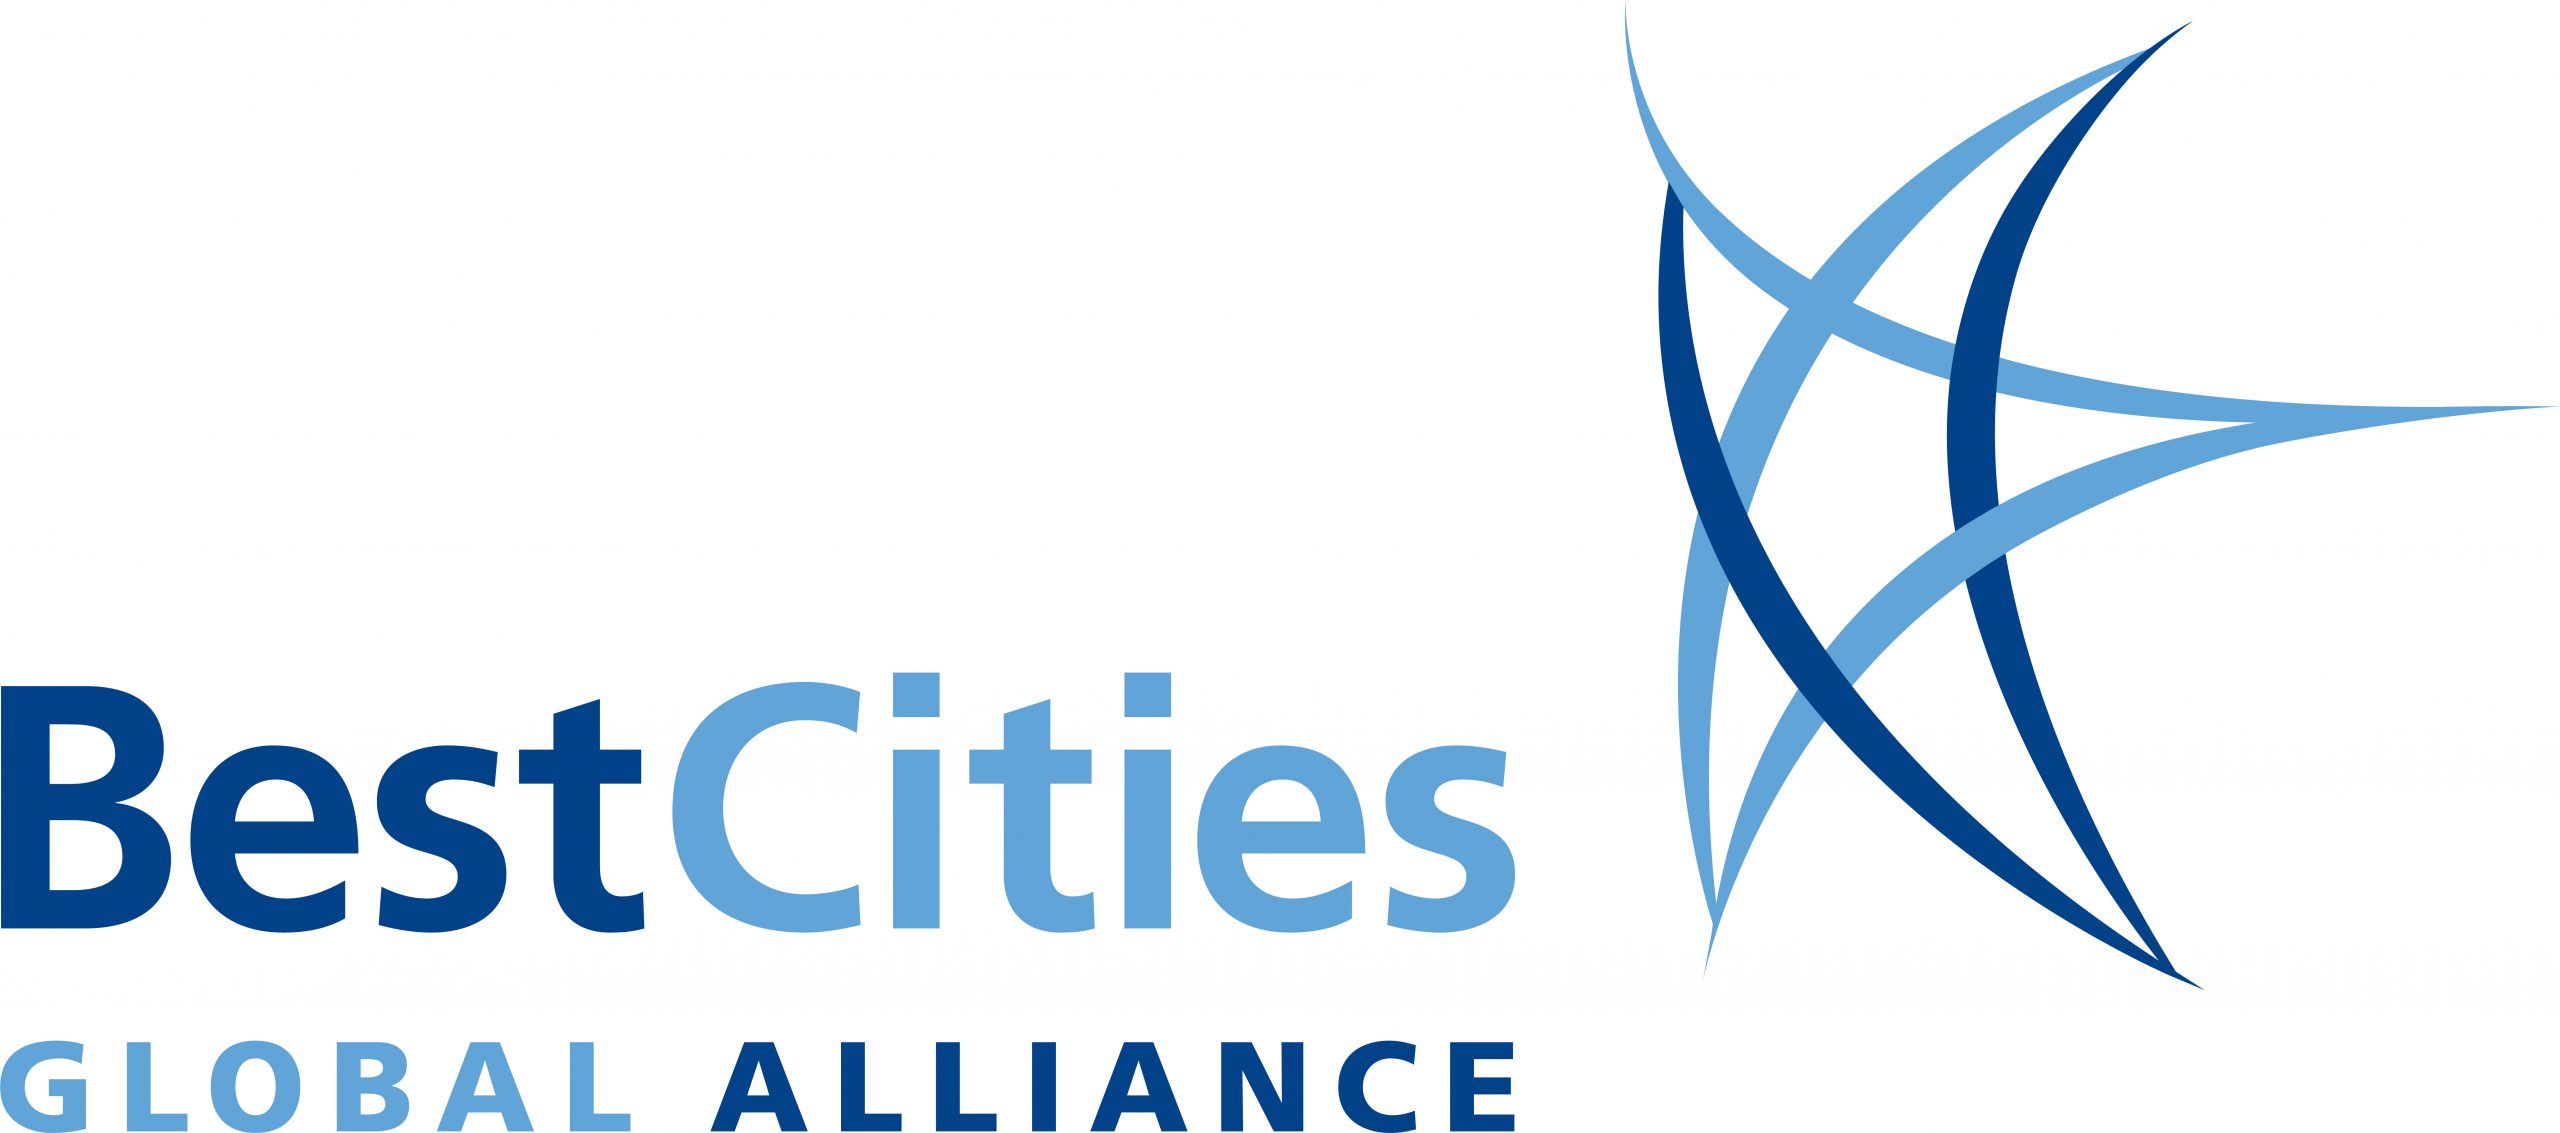 https://www.icppp.org/wp-content/uploads/2020/08/Best-Cities-Logo-Full-Colour-scaled.jpg